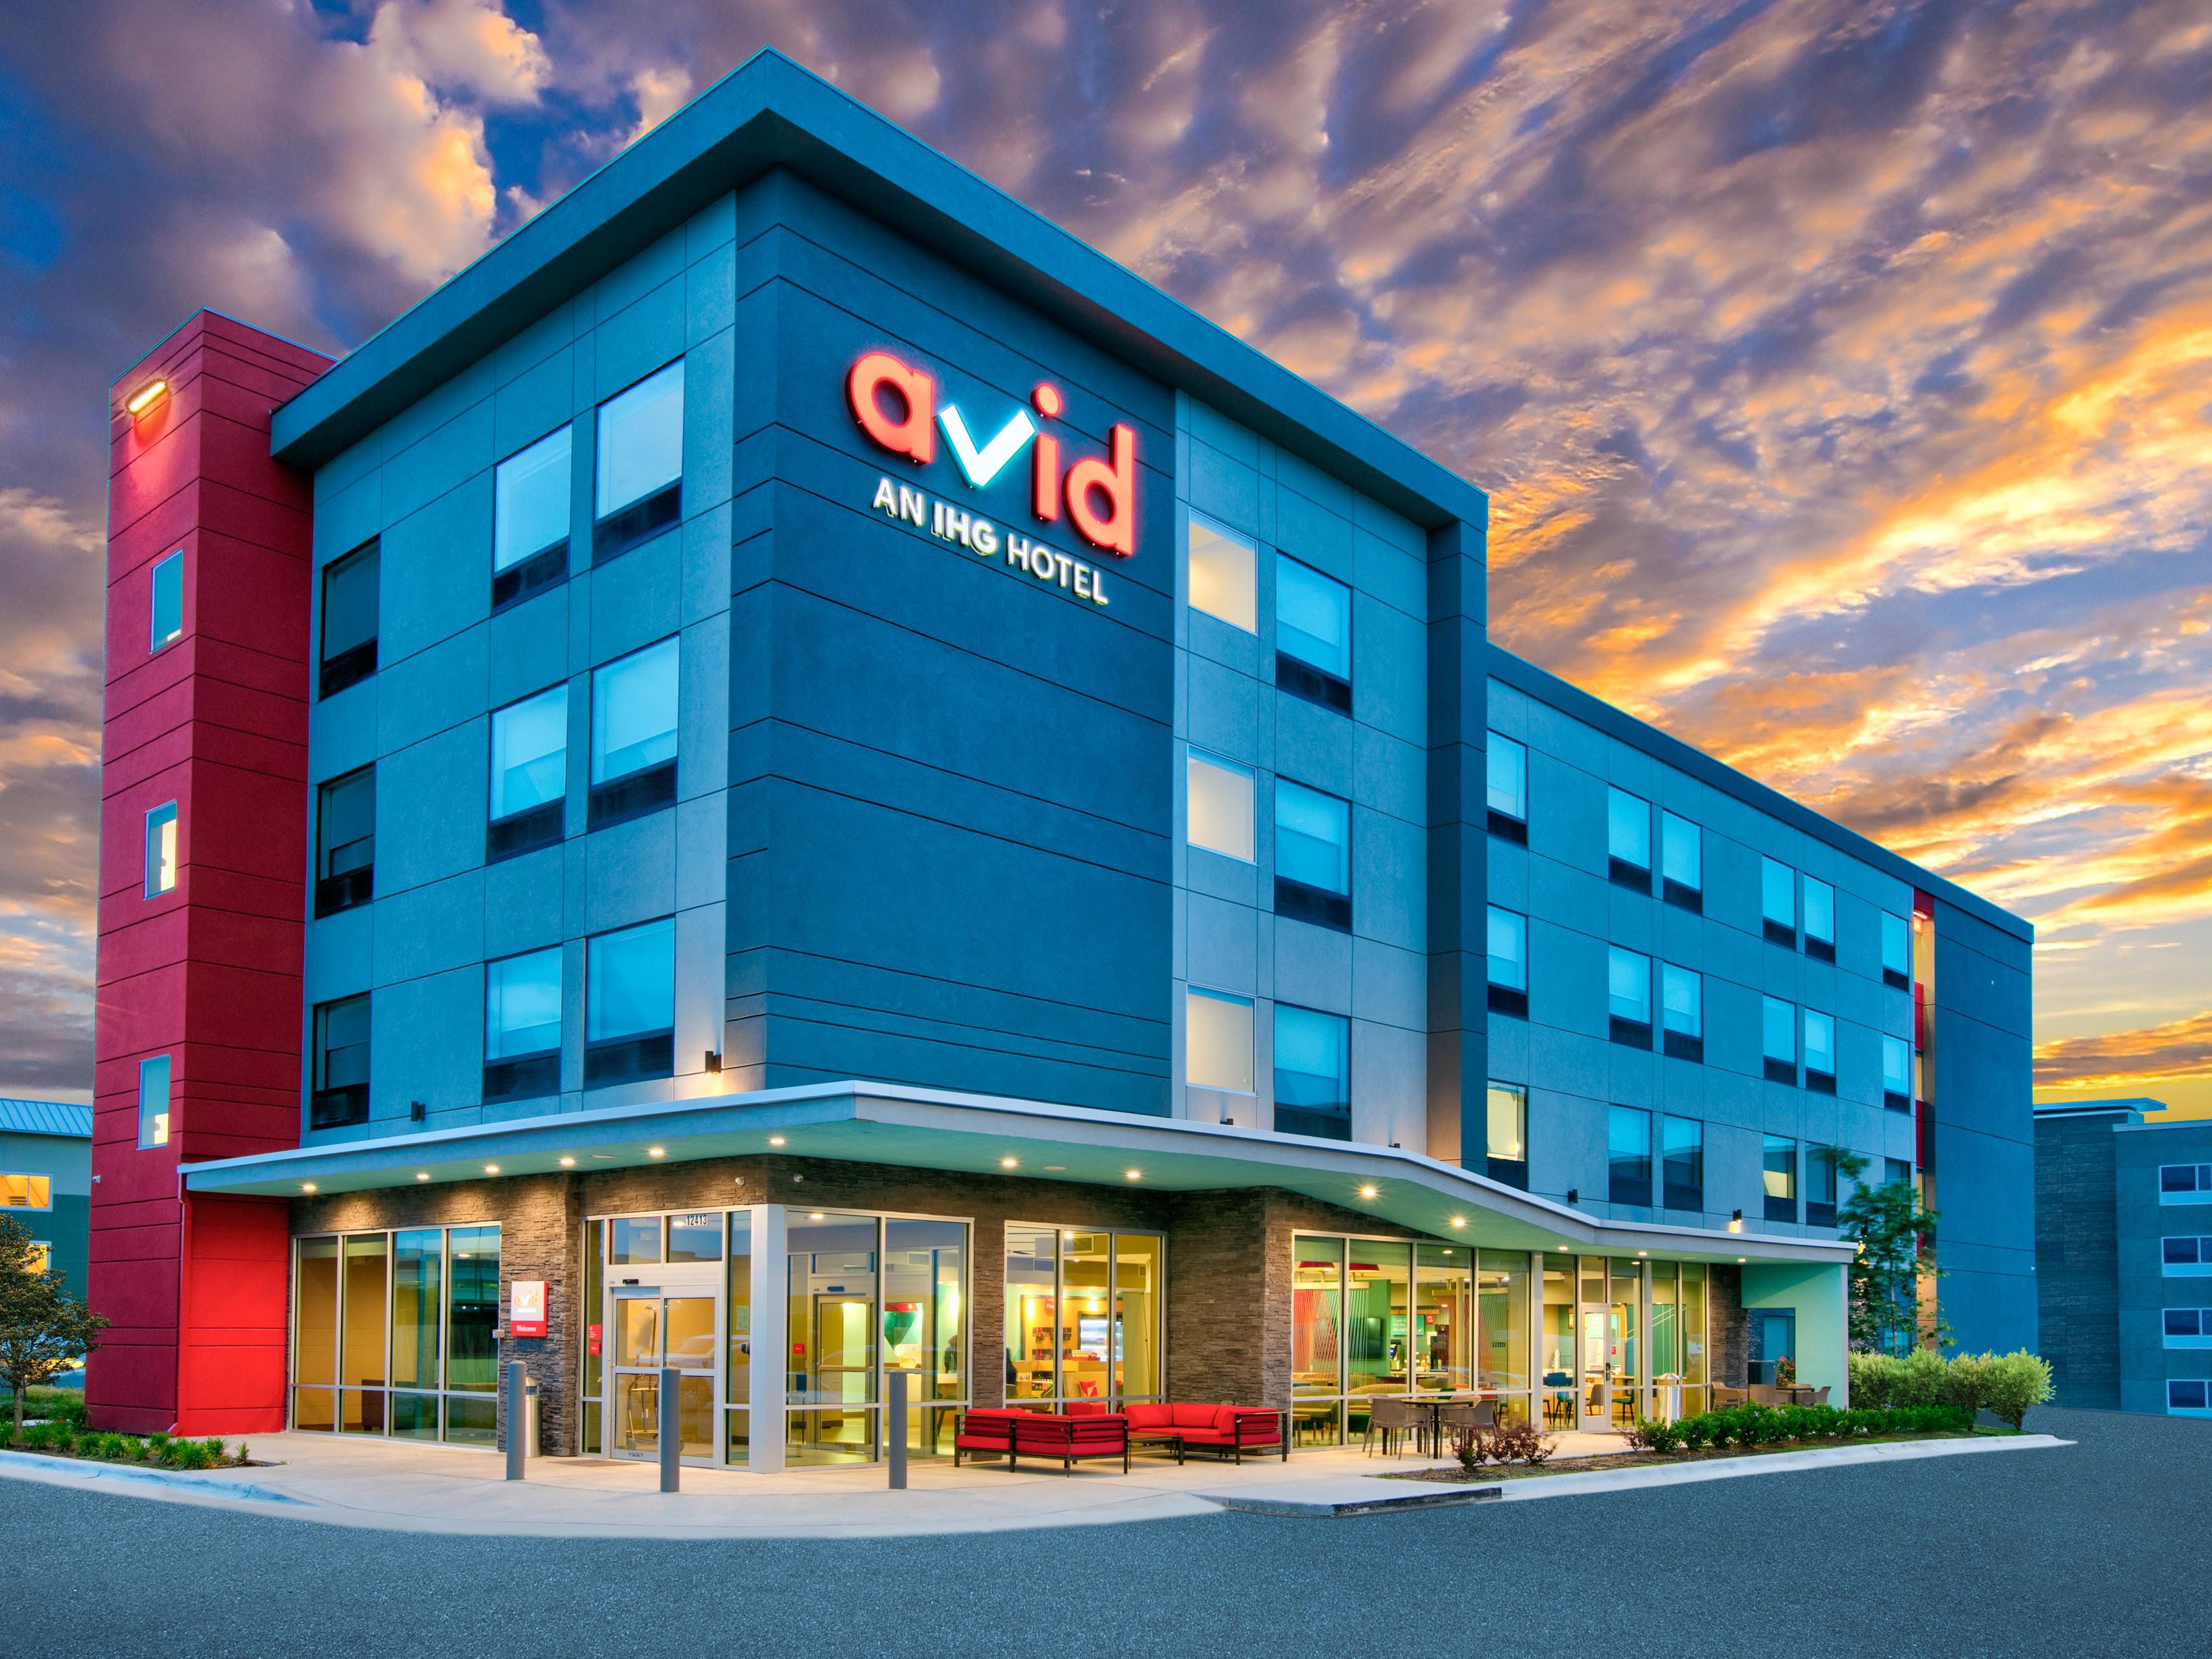 Avid Hotels Austin 7780325311 4x3